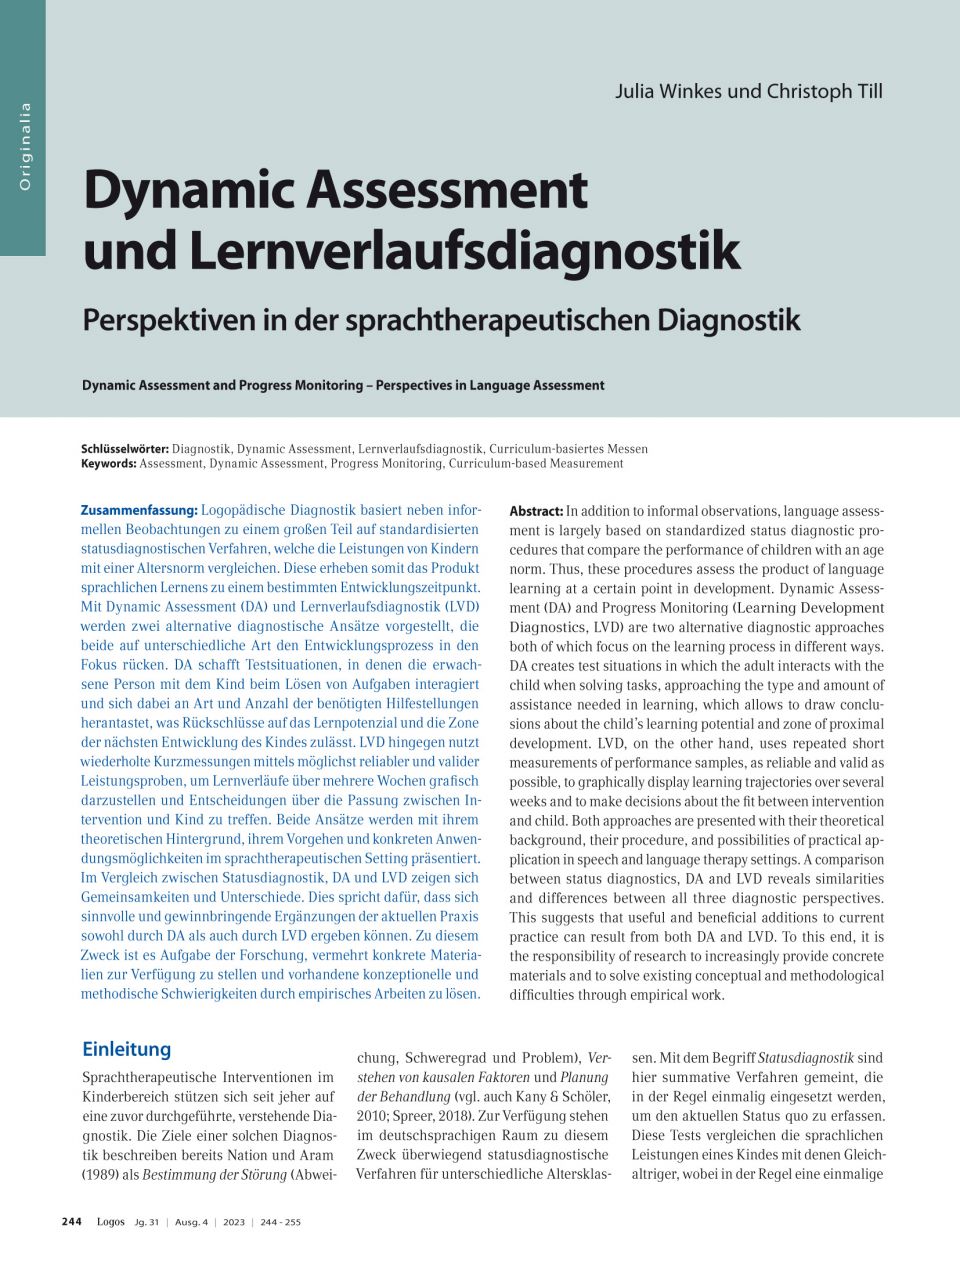 Dynamic Assessment und Lernverlaufsdiagnostik